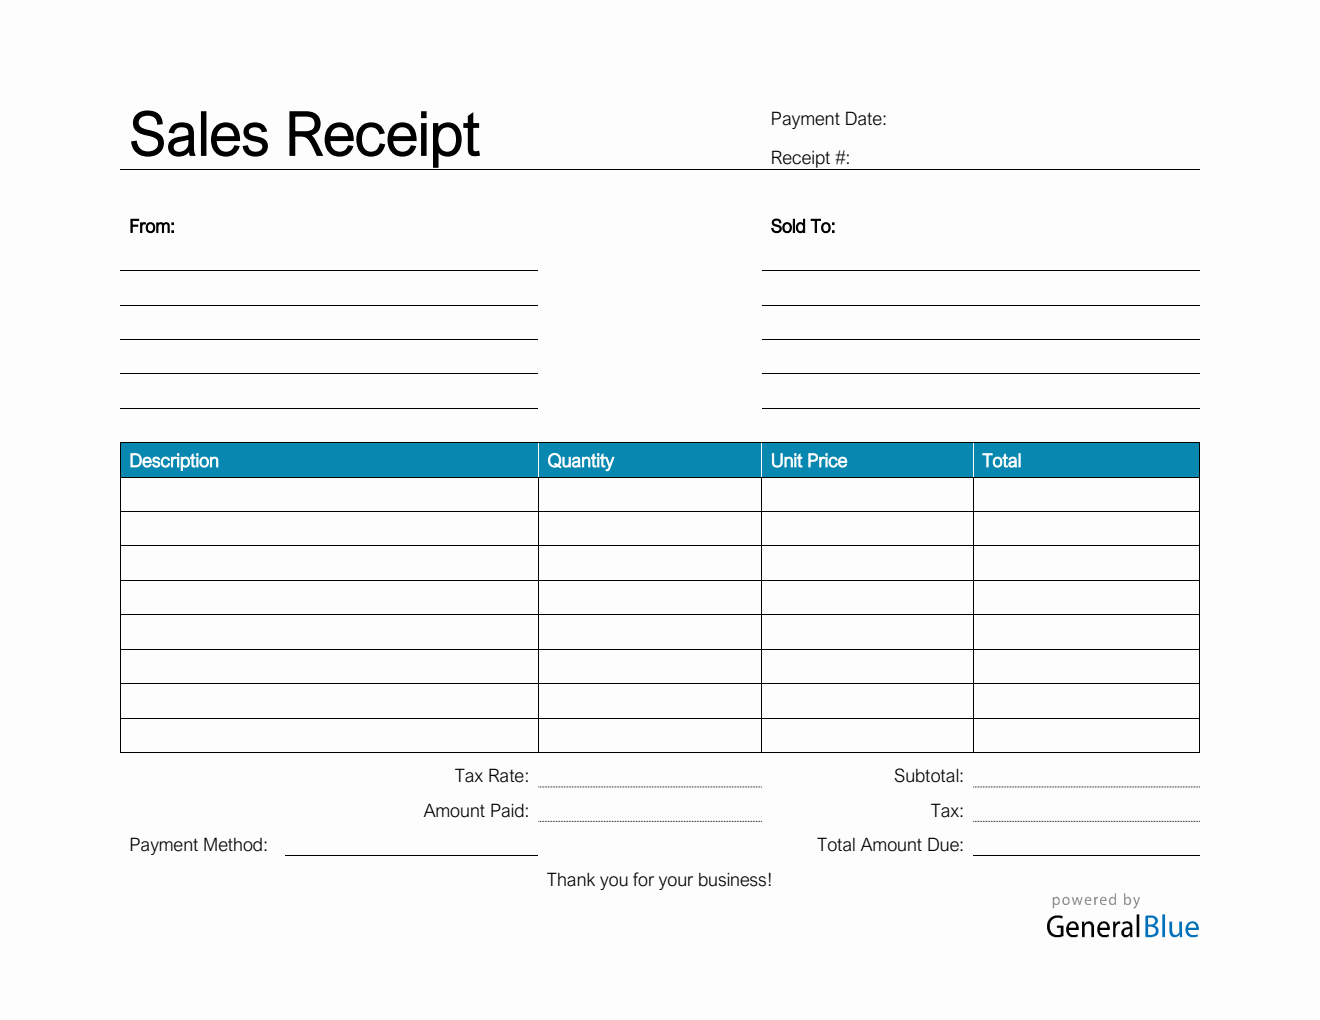 Sales Receipt Template in PDF (Simple)